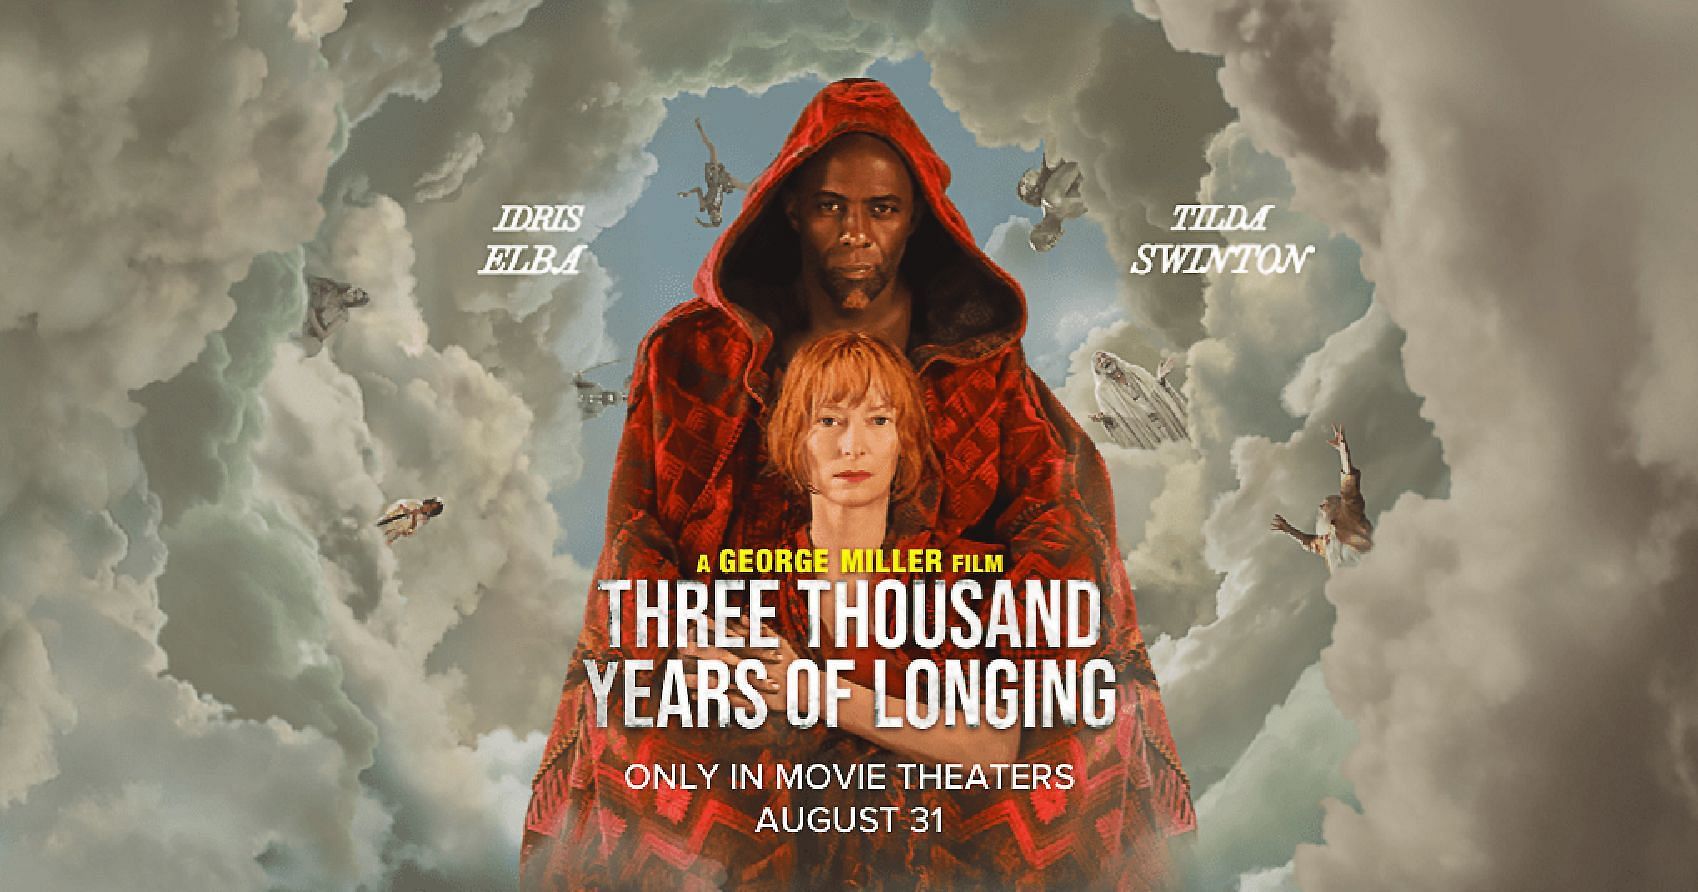 Three Thousand Years of Longing (Image via MGM)